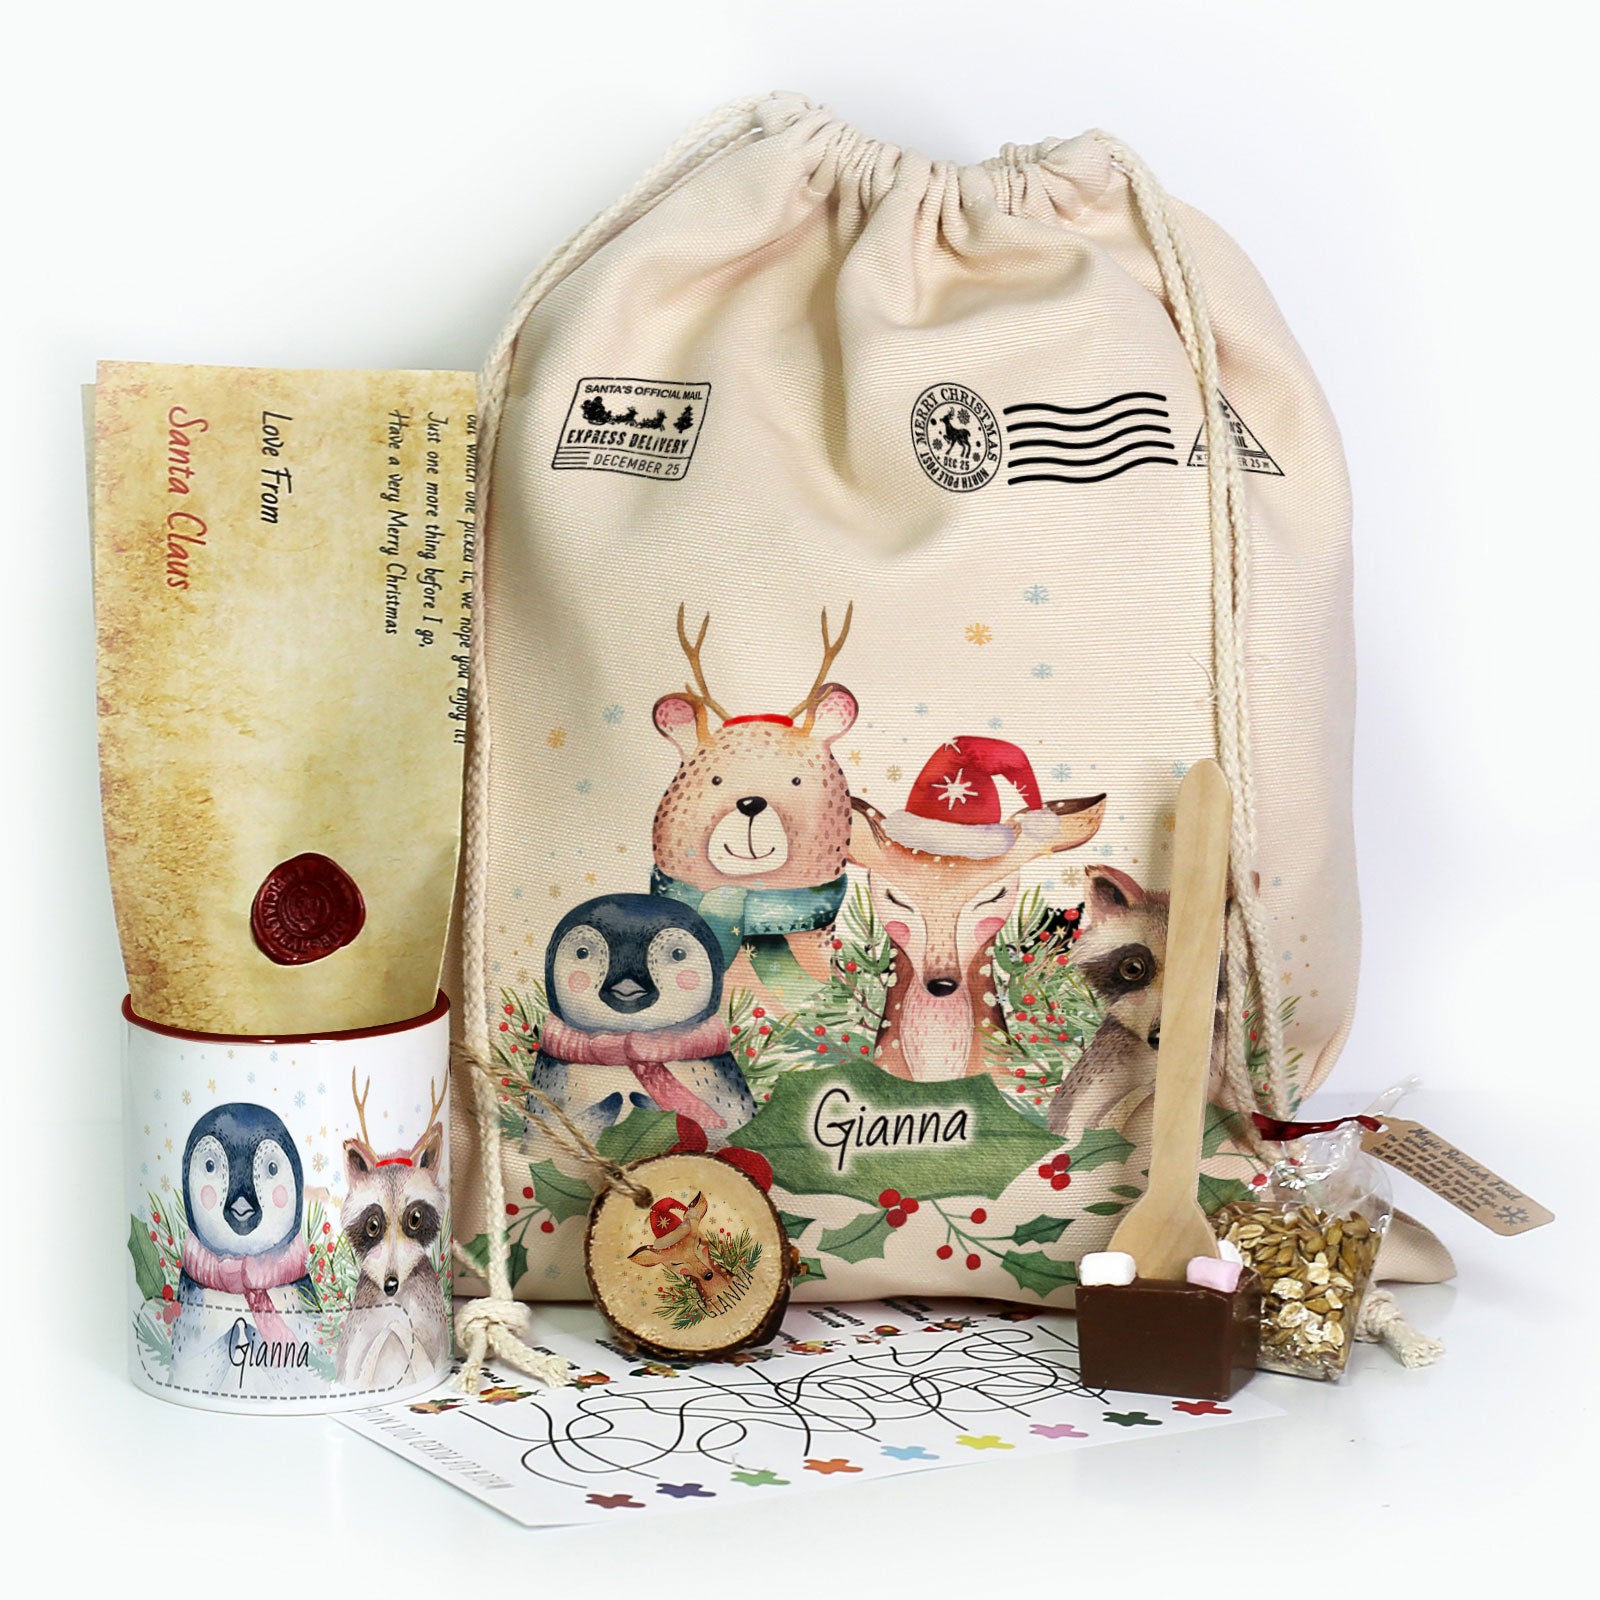 Personalised Christmas Gift Sack with Christmas Animals Design